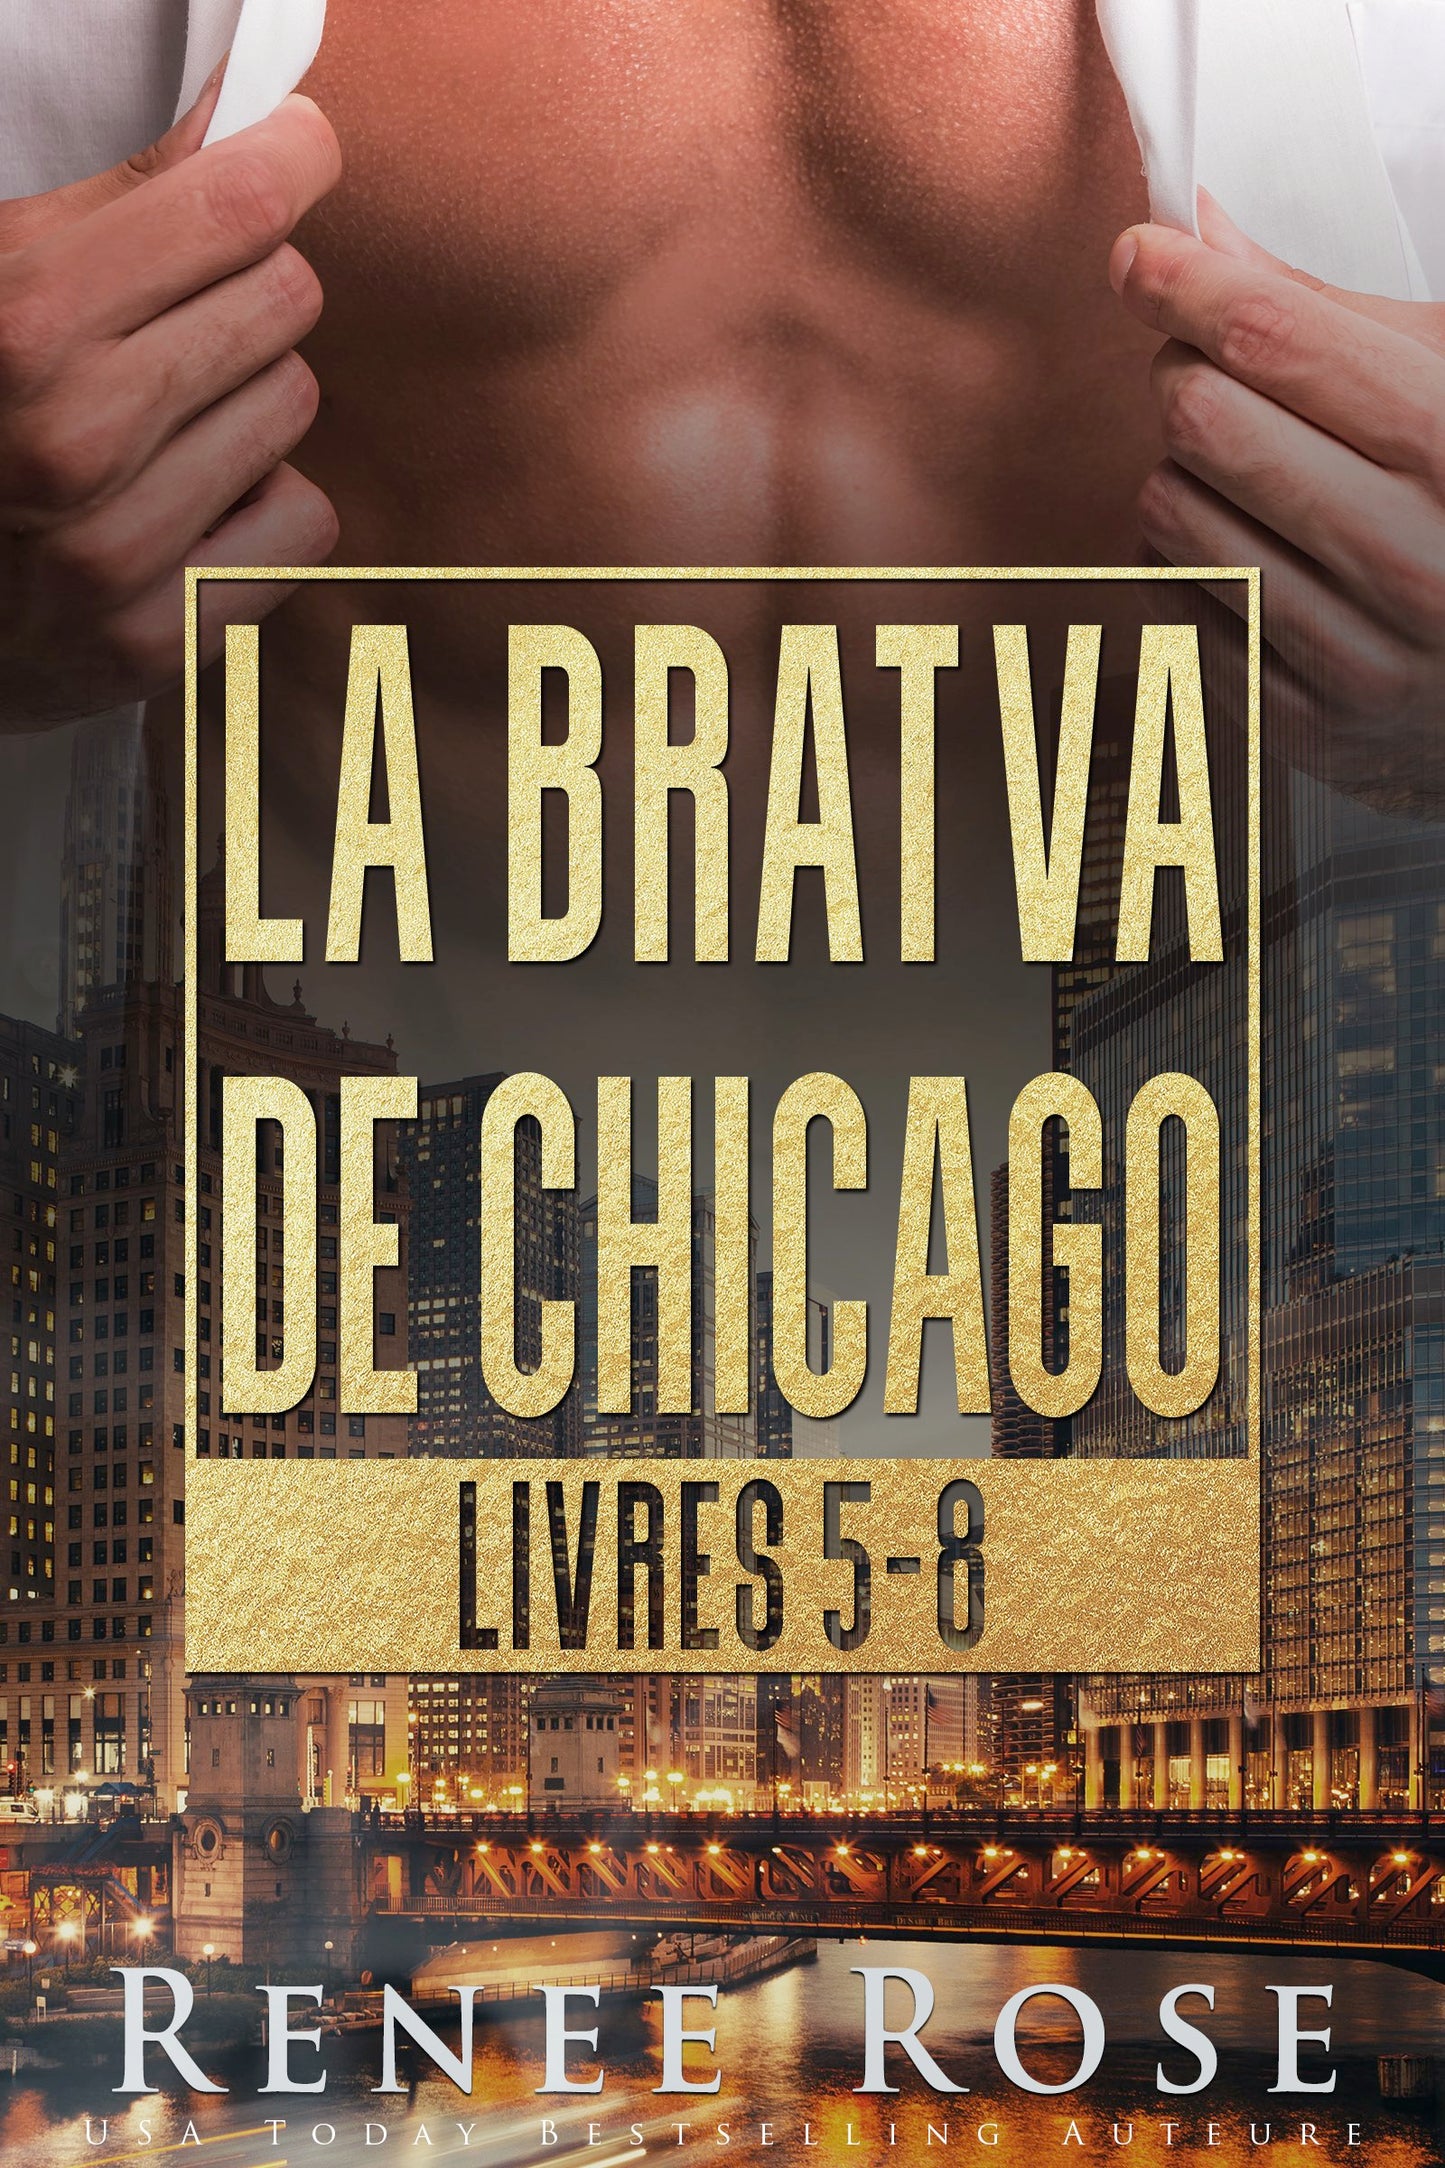 La Bratva de Chicago Livres 5-8